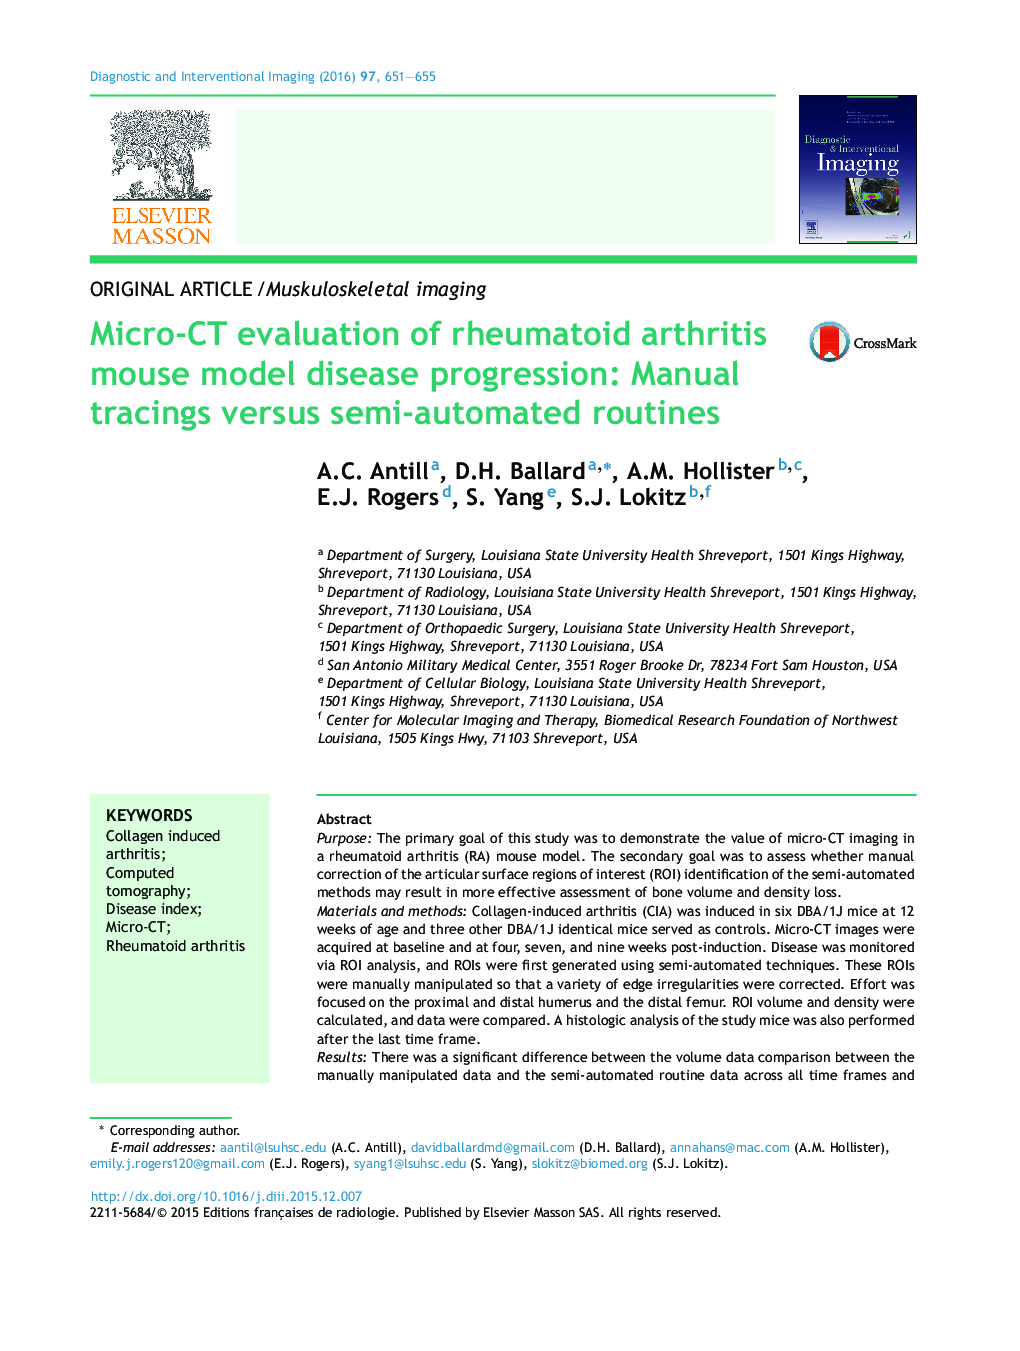 Micro-CT evaluation of rheumatoid arthritis mouse model disease progression: Manual tracings versus semi-automated routines